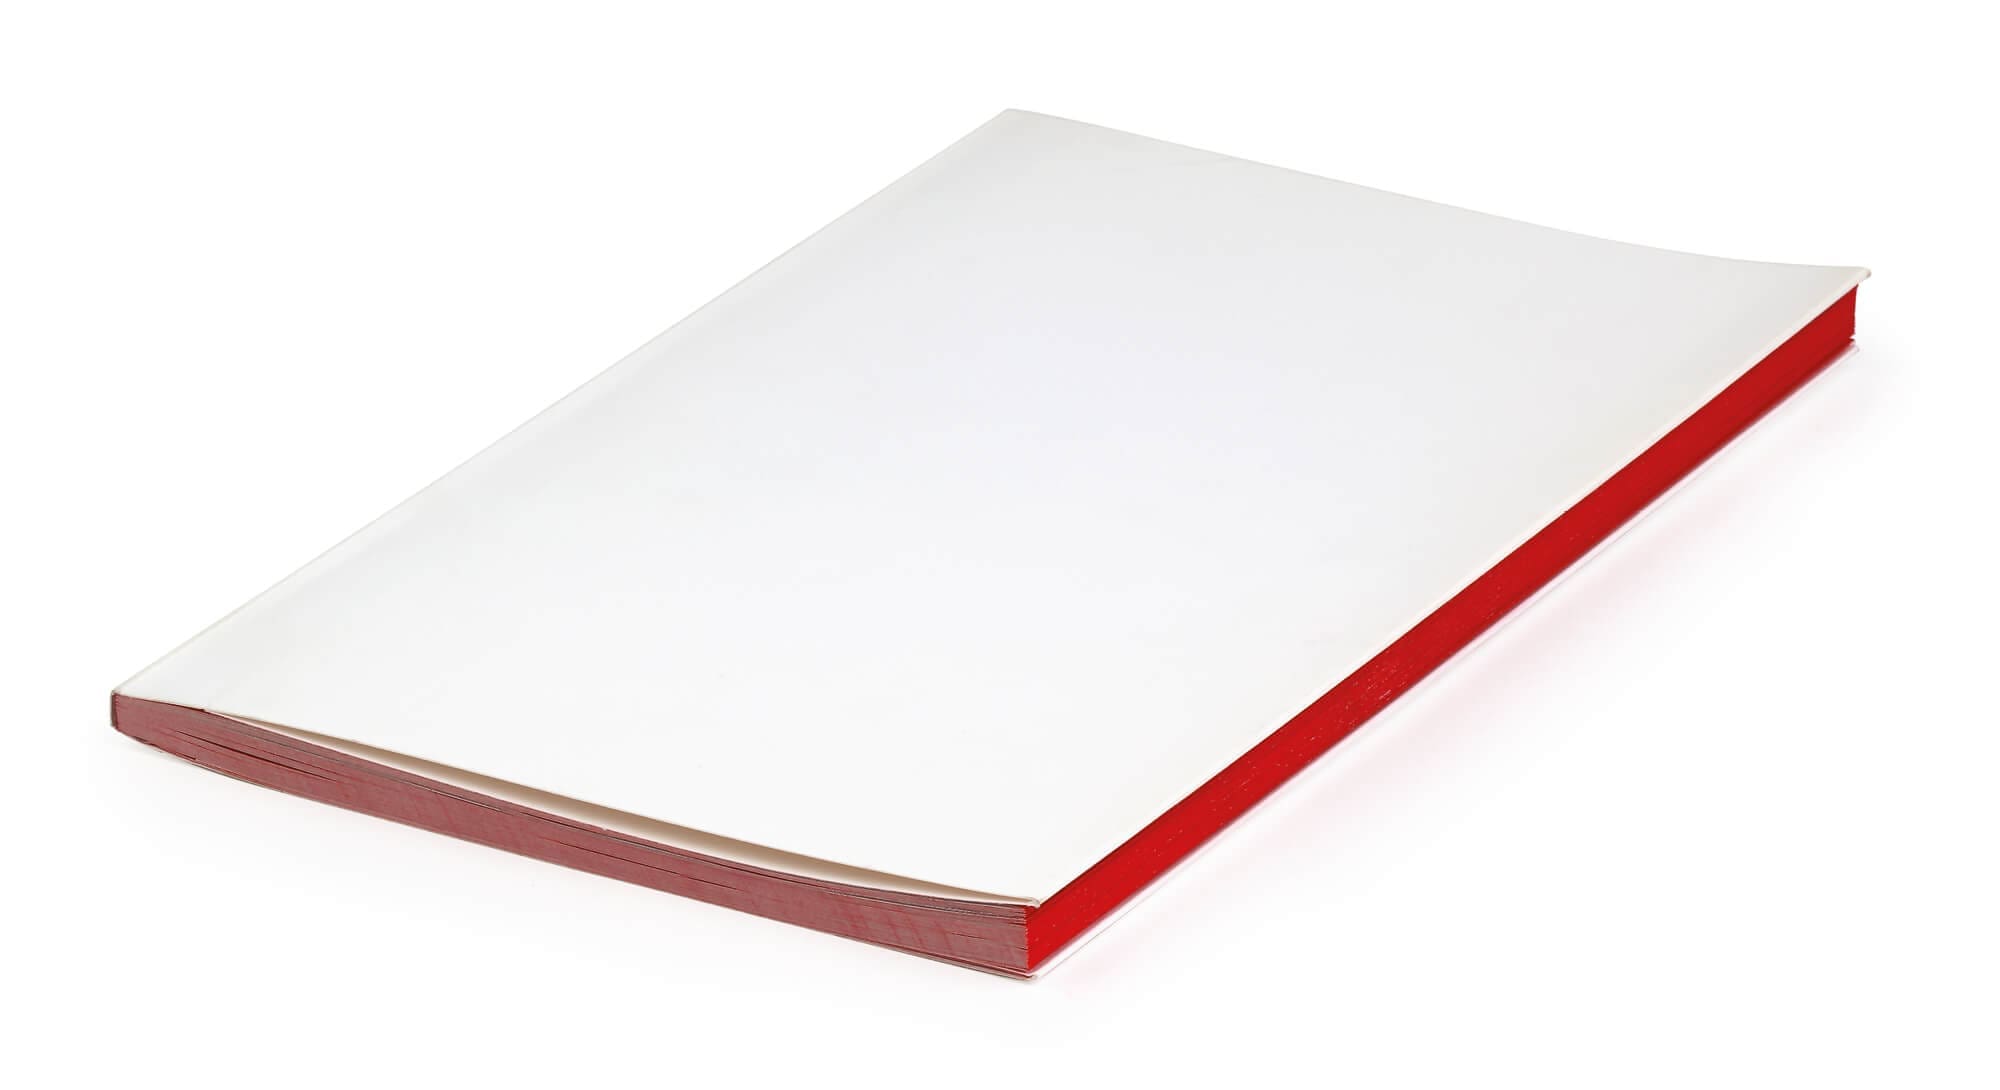 La couverture blanche du catalogue d'India Mahdavi, impression rouge, design IchetKar